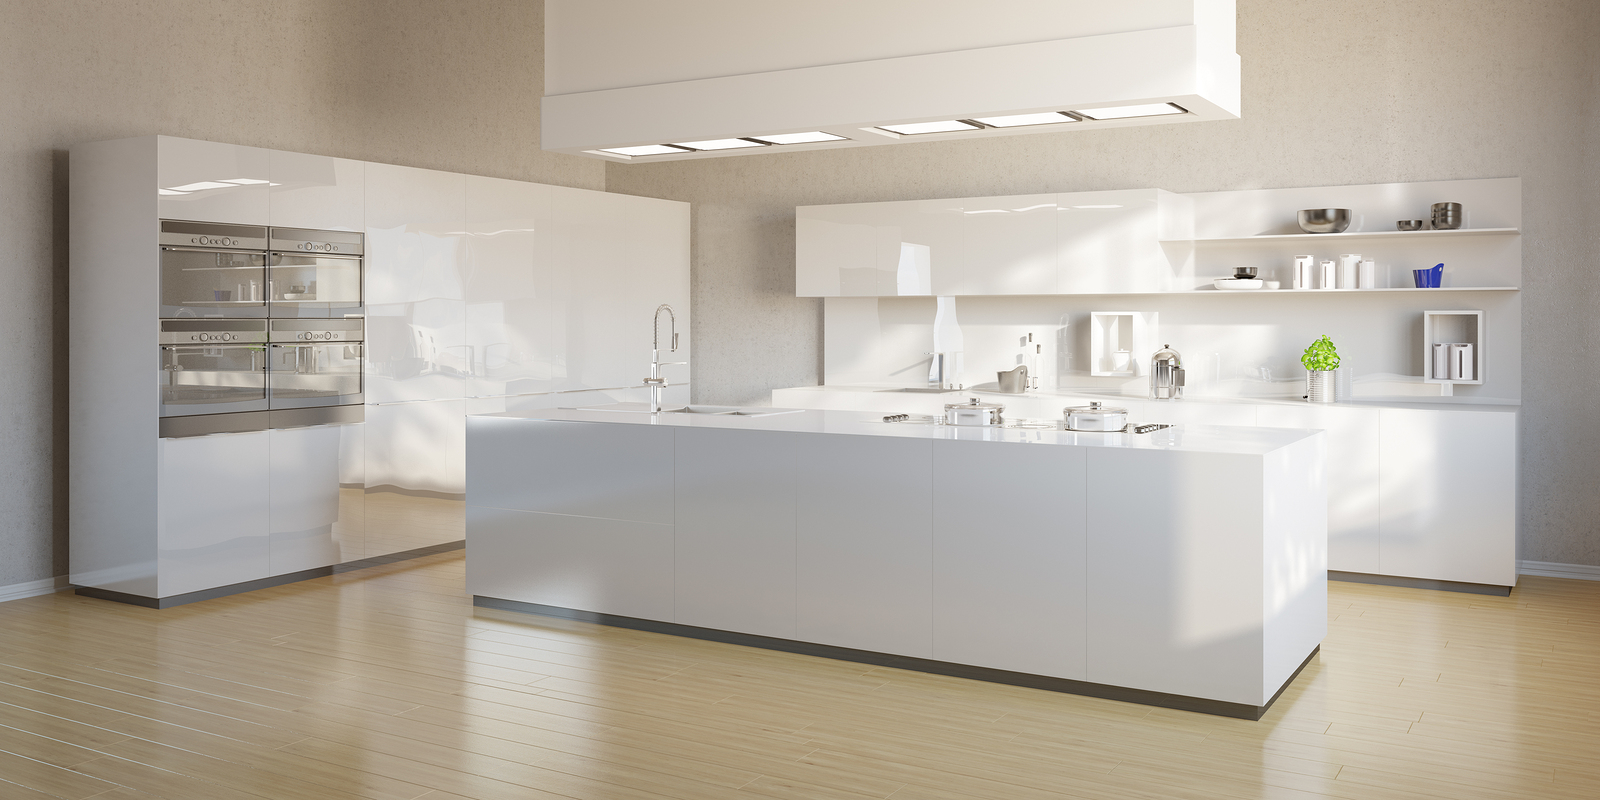 bigstock-New-bright-kitchen-with-modern-73047184